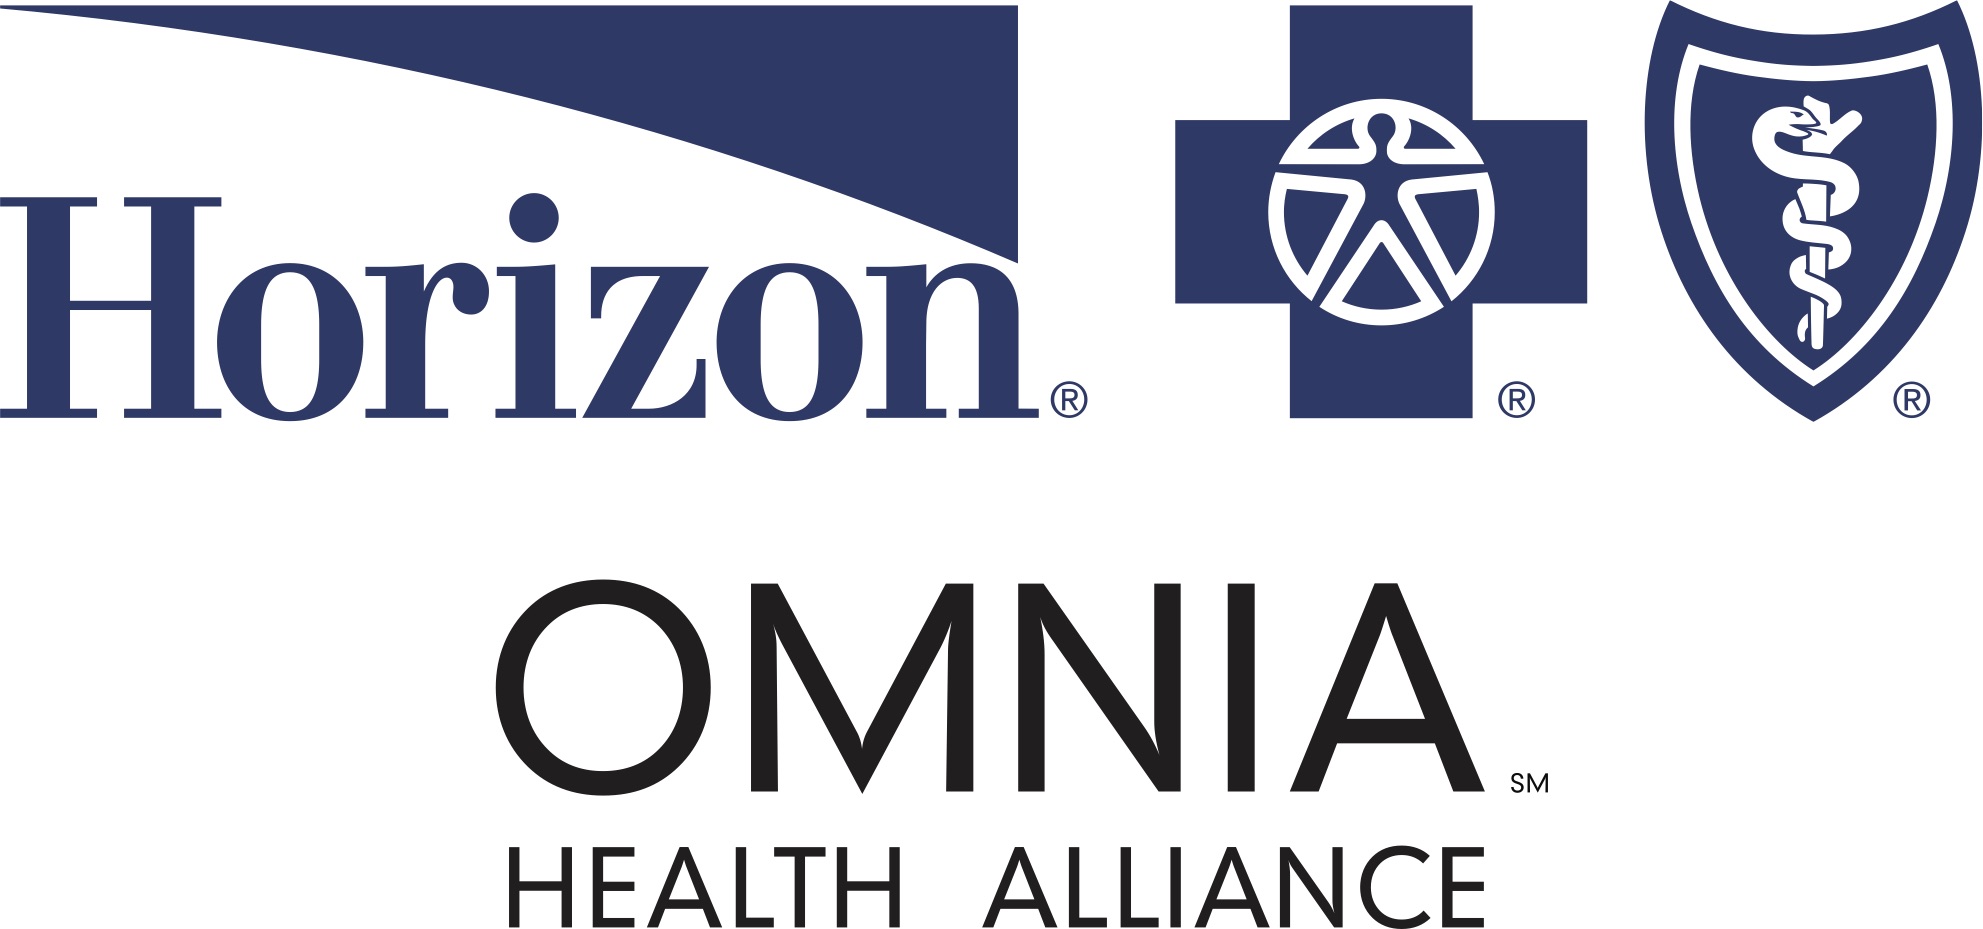 Horizon BCBSNJ Launches Education Effort on the OMNIA Health Alliance